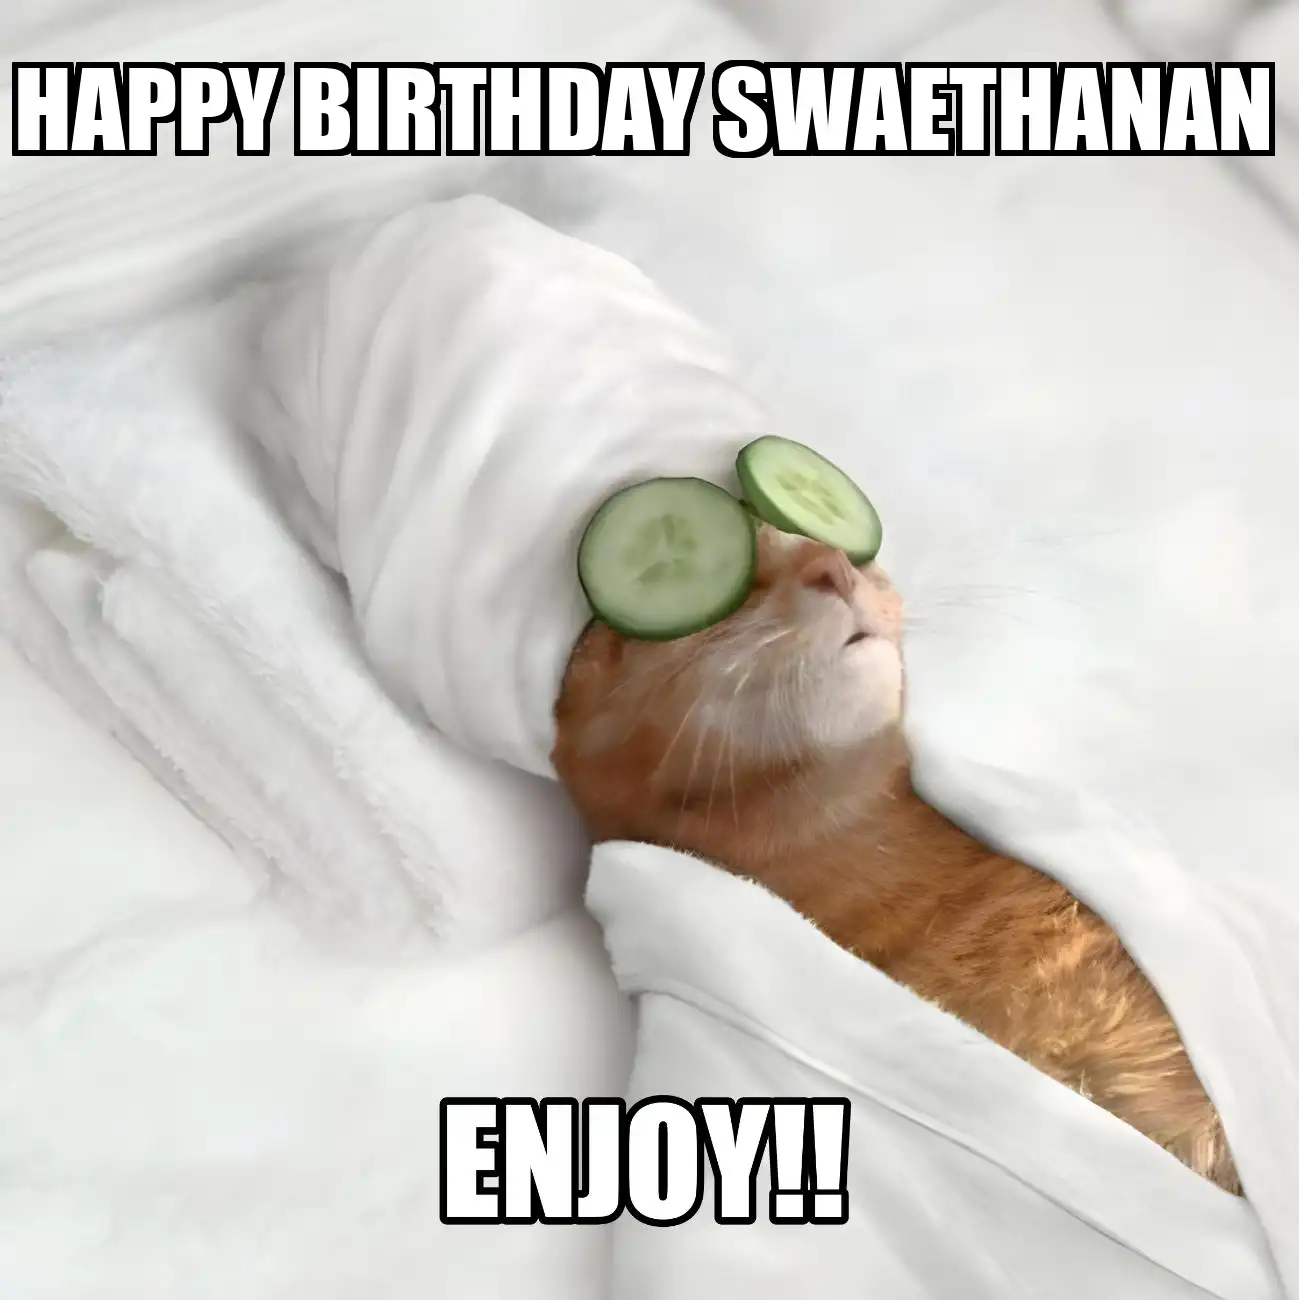 Happy Birthday Swaethanan Enjoy Cat Meme